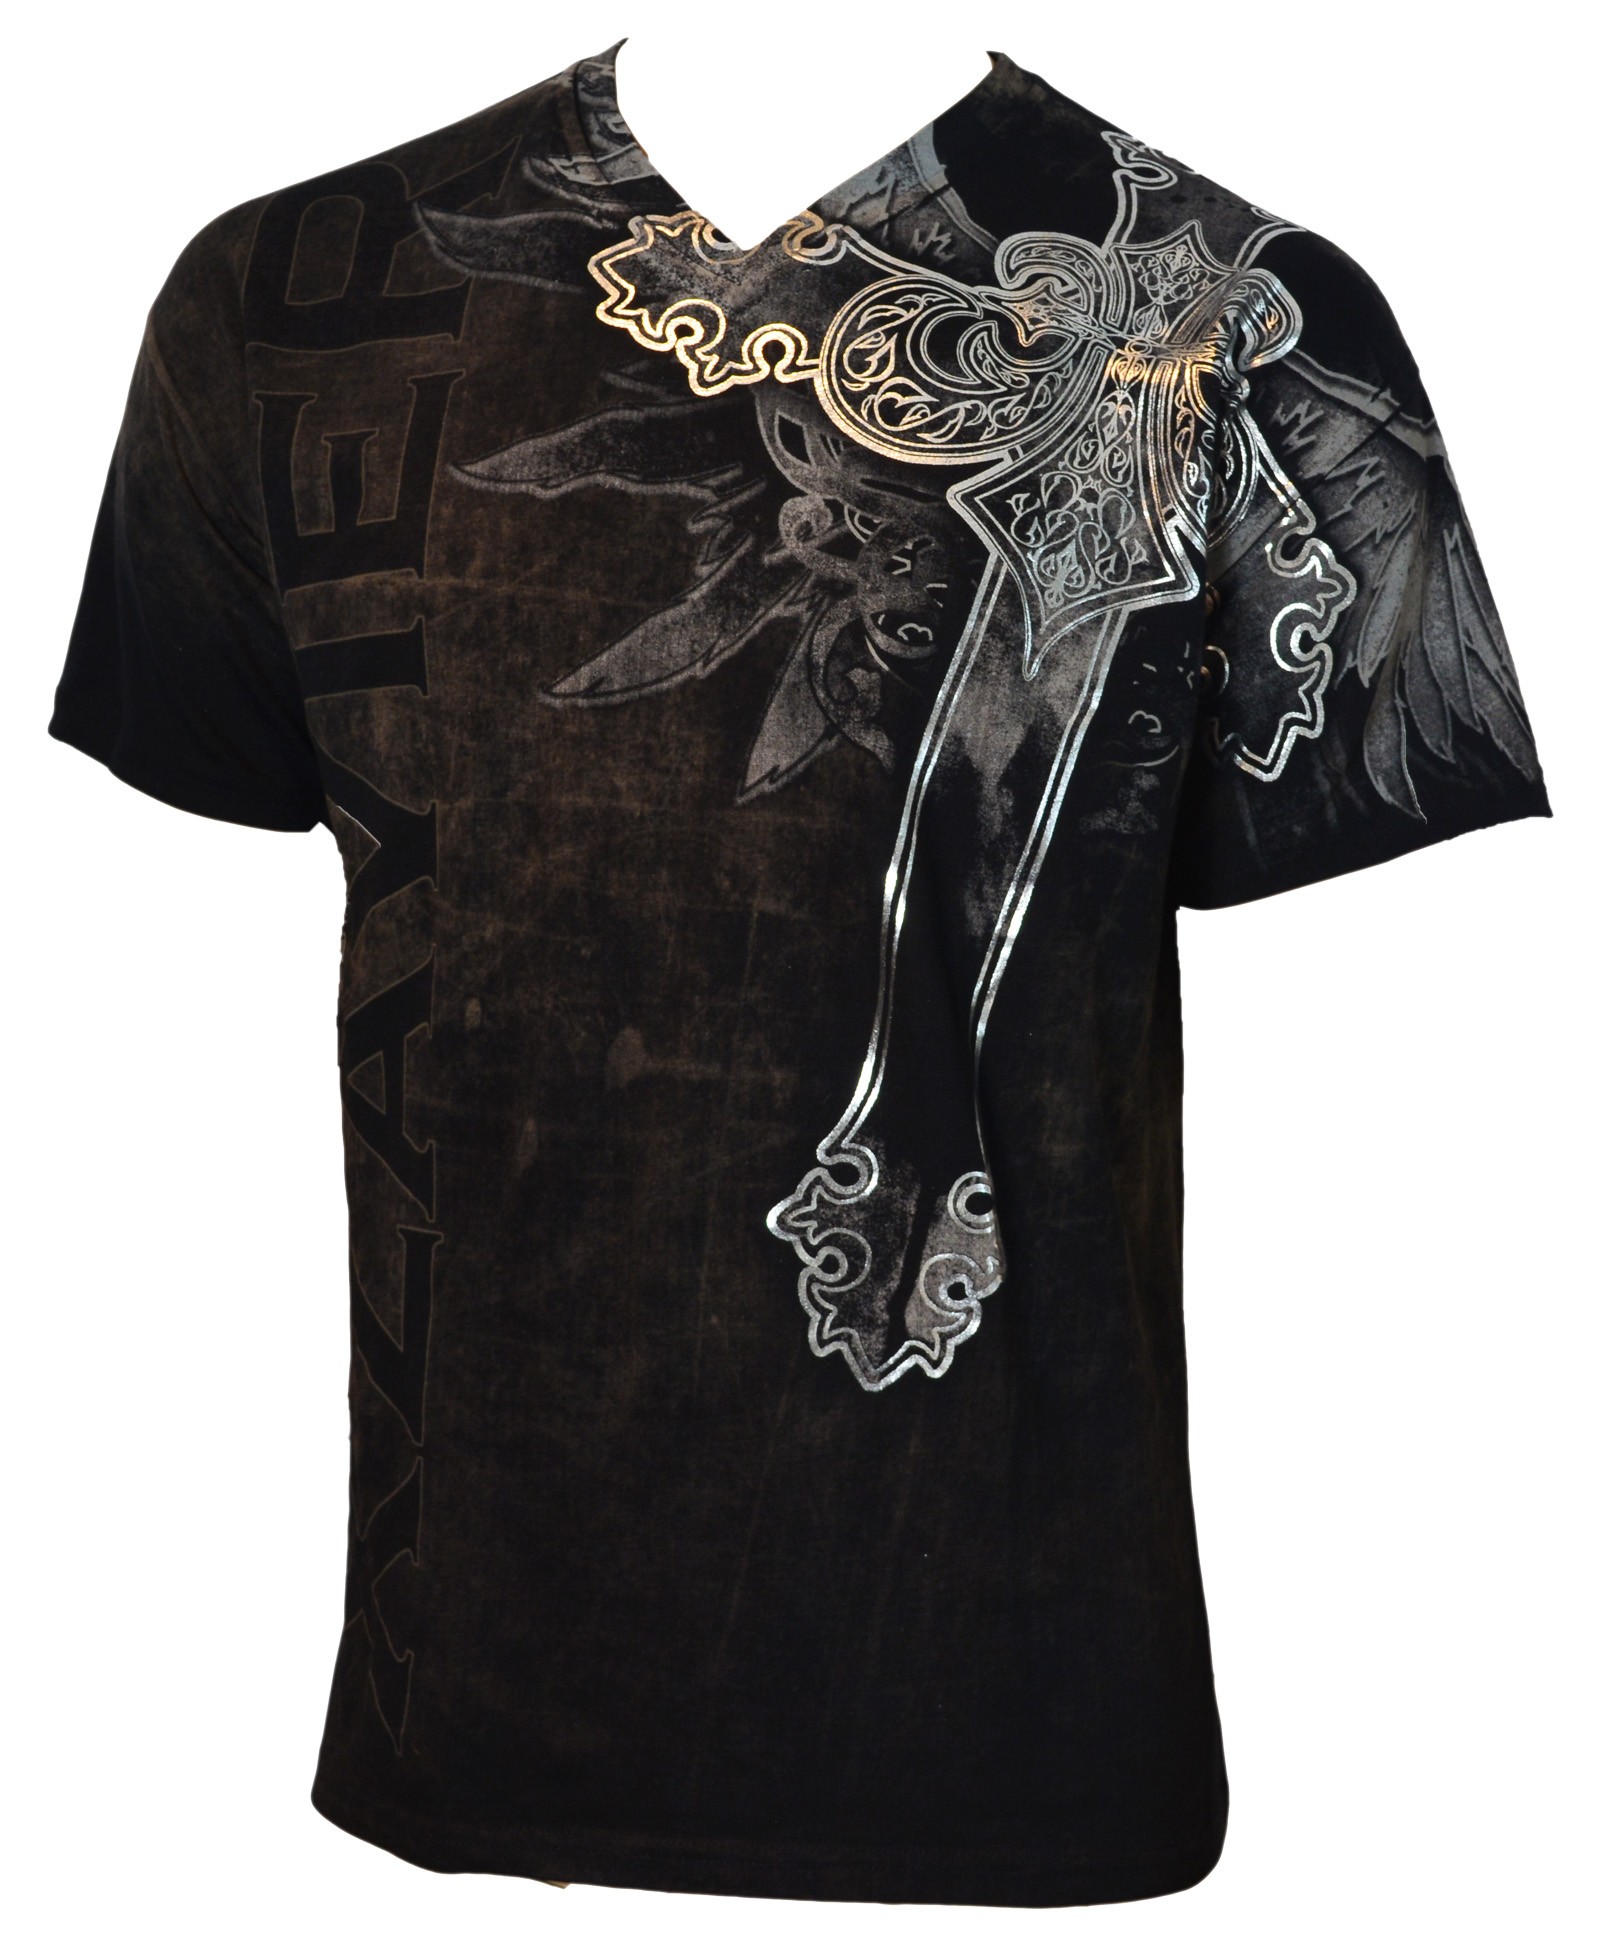 Xzavier - Righteous Cross T-Shirt